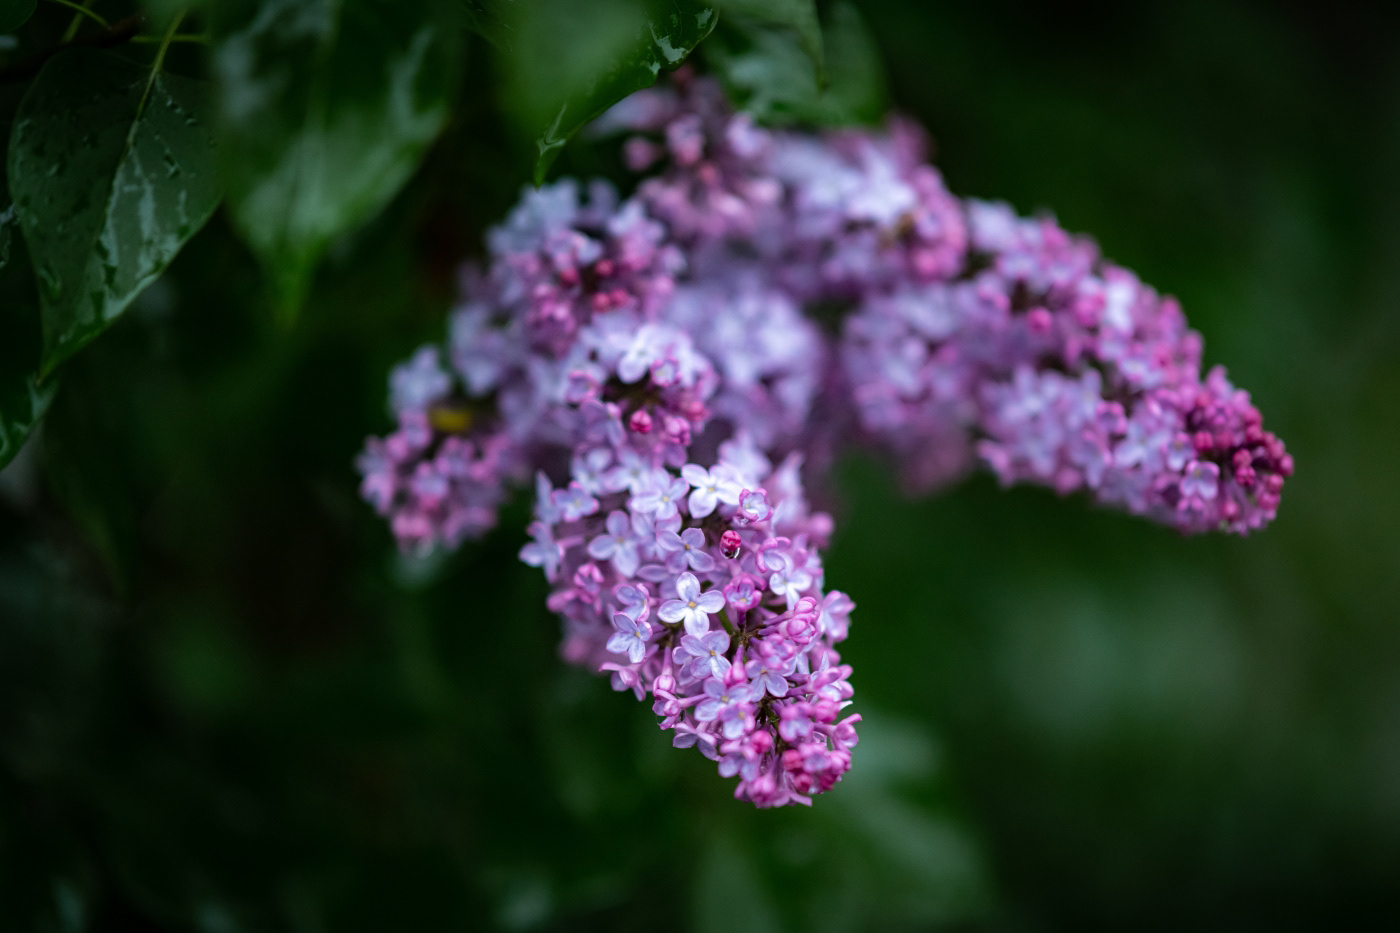 Syringa blossoms during rainy day